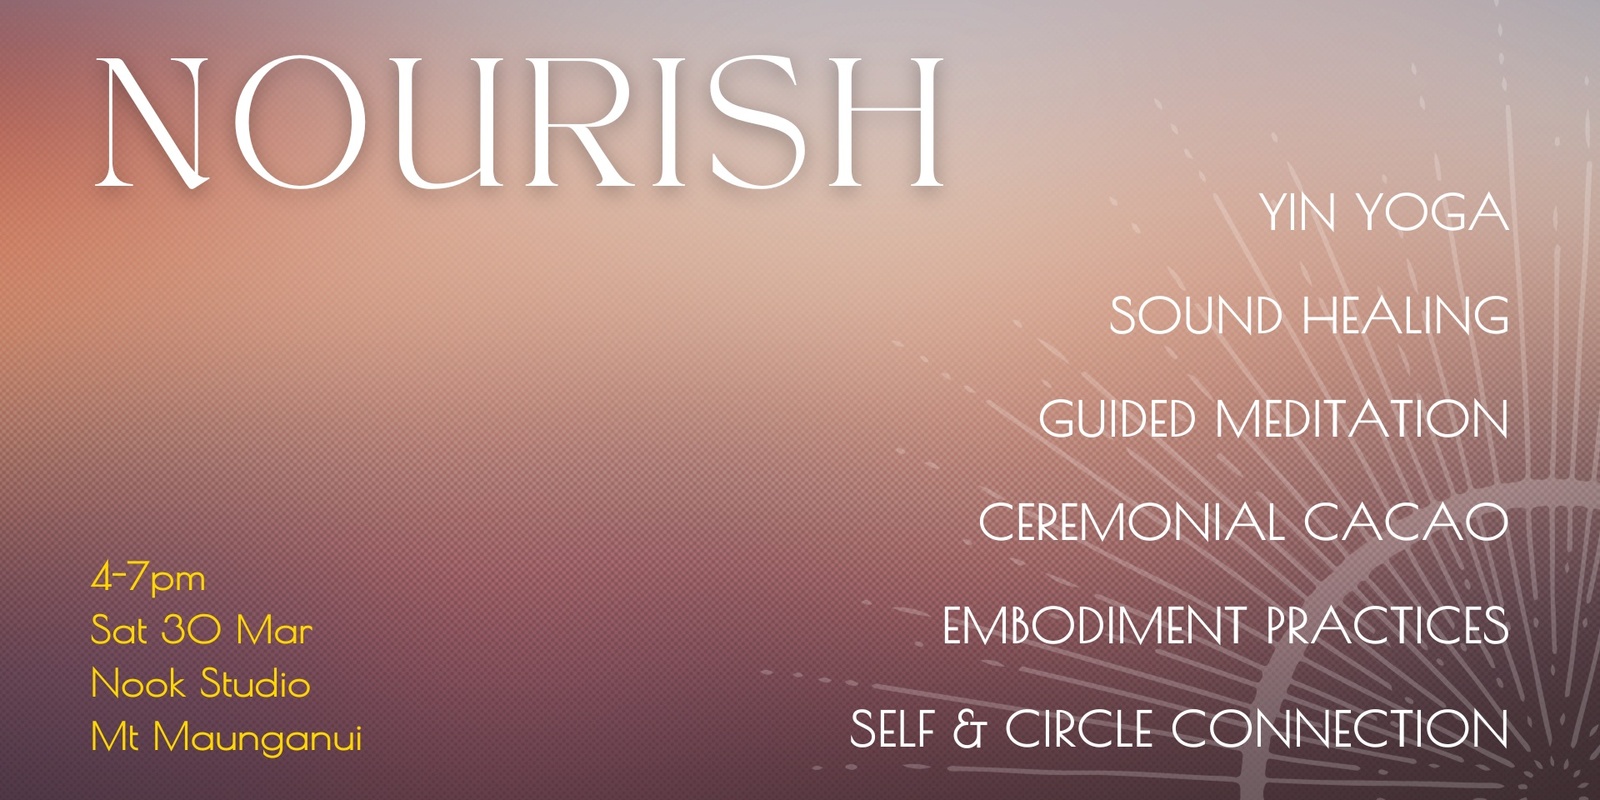 Banner image for NOURISH